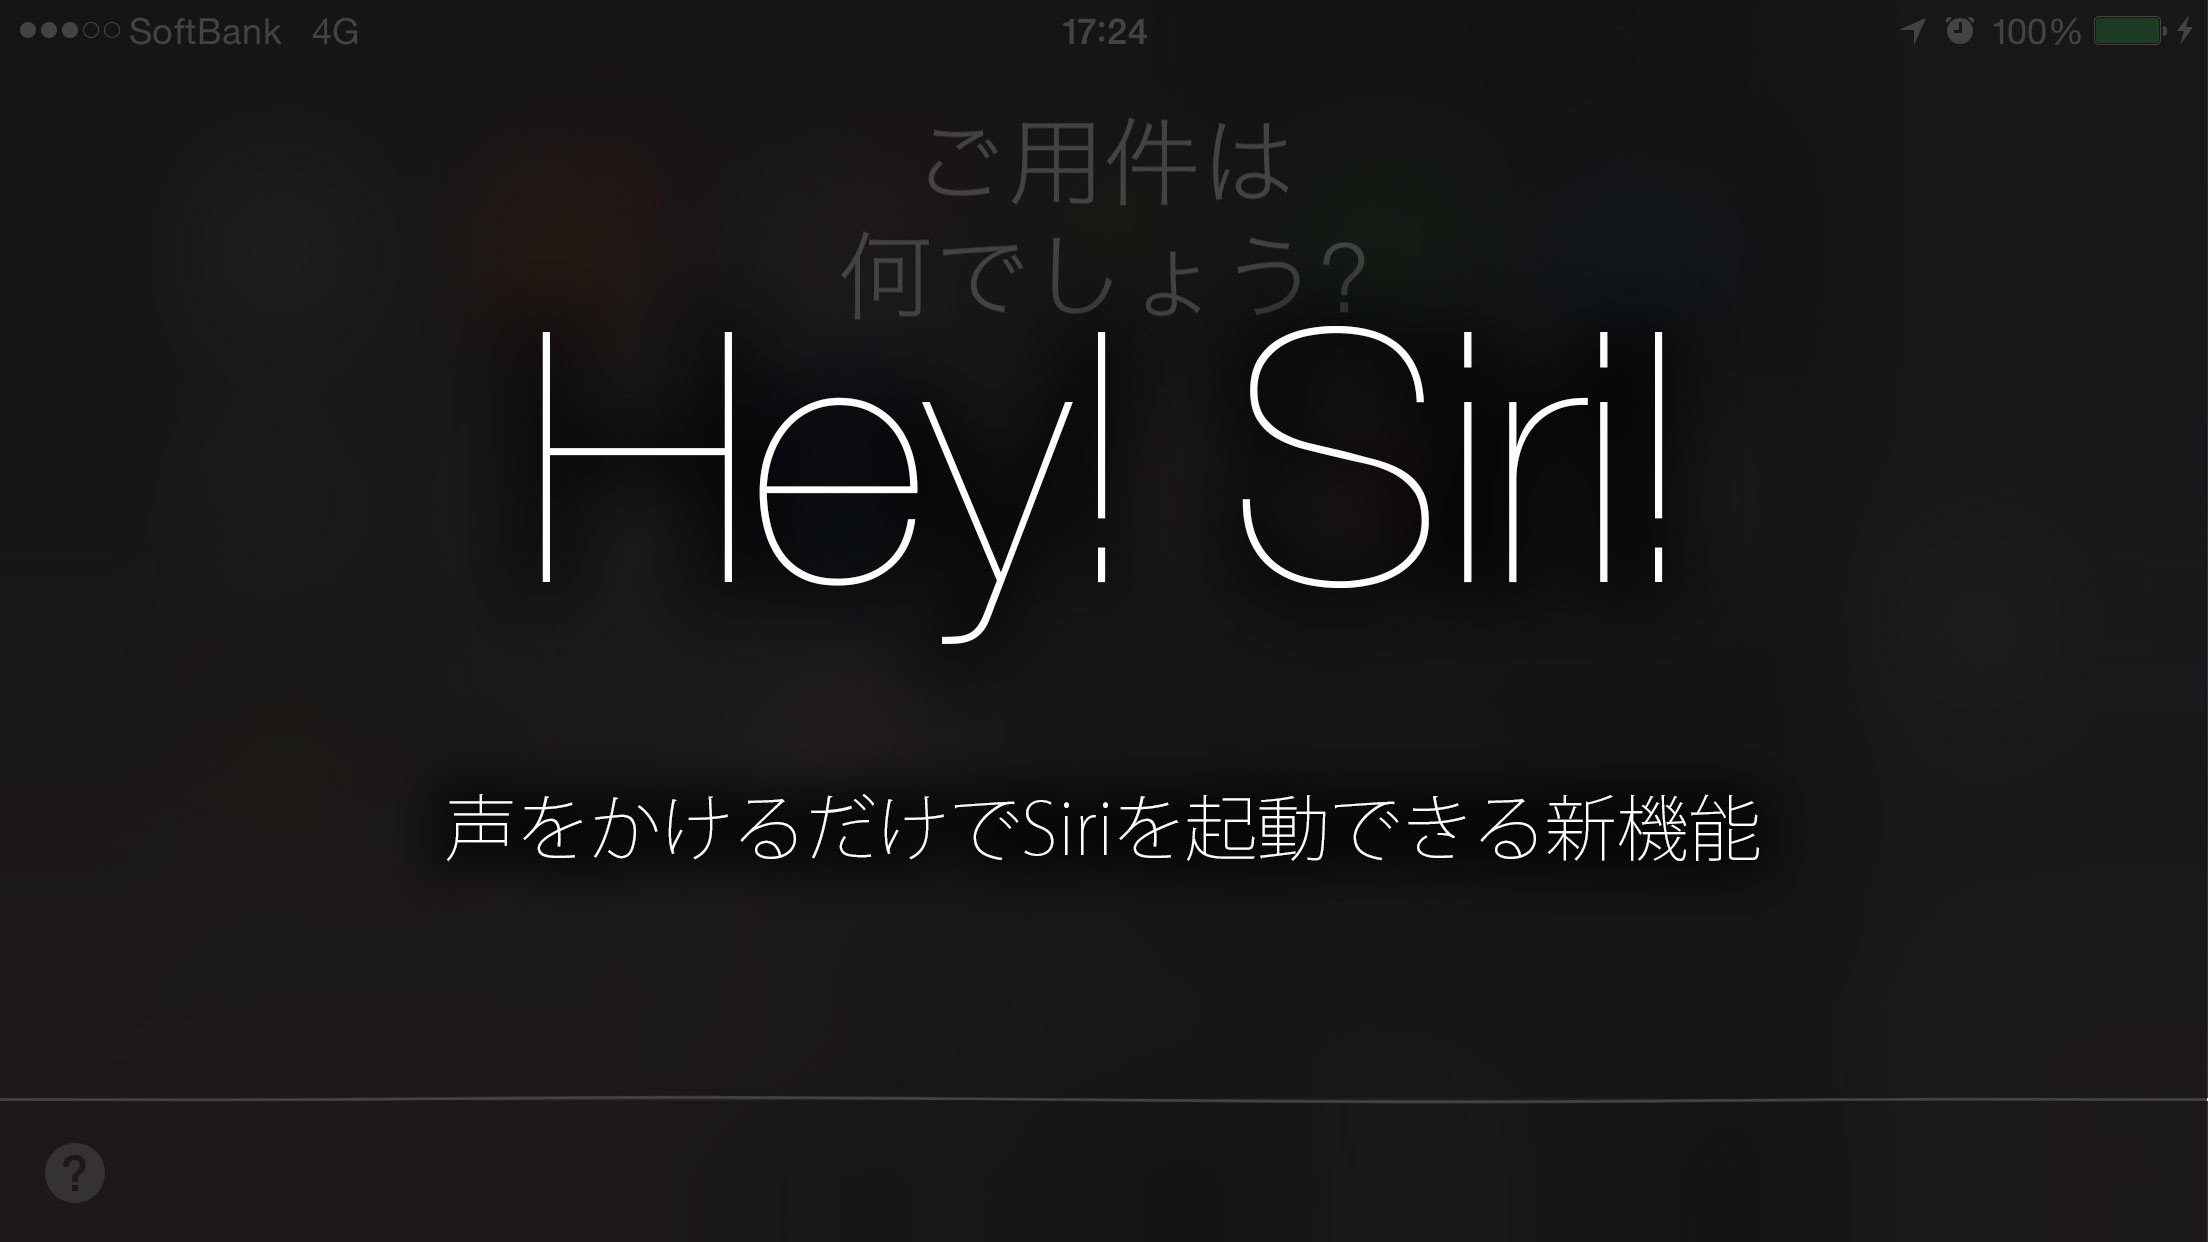 Hey! Siri!